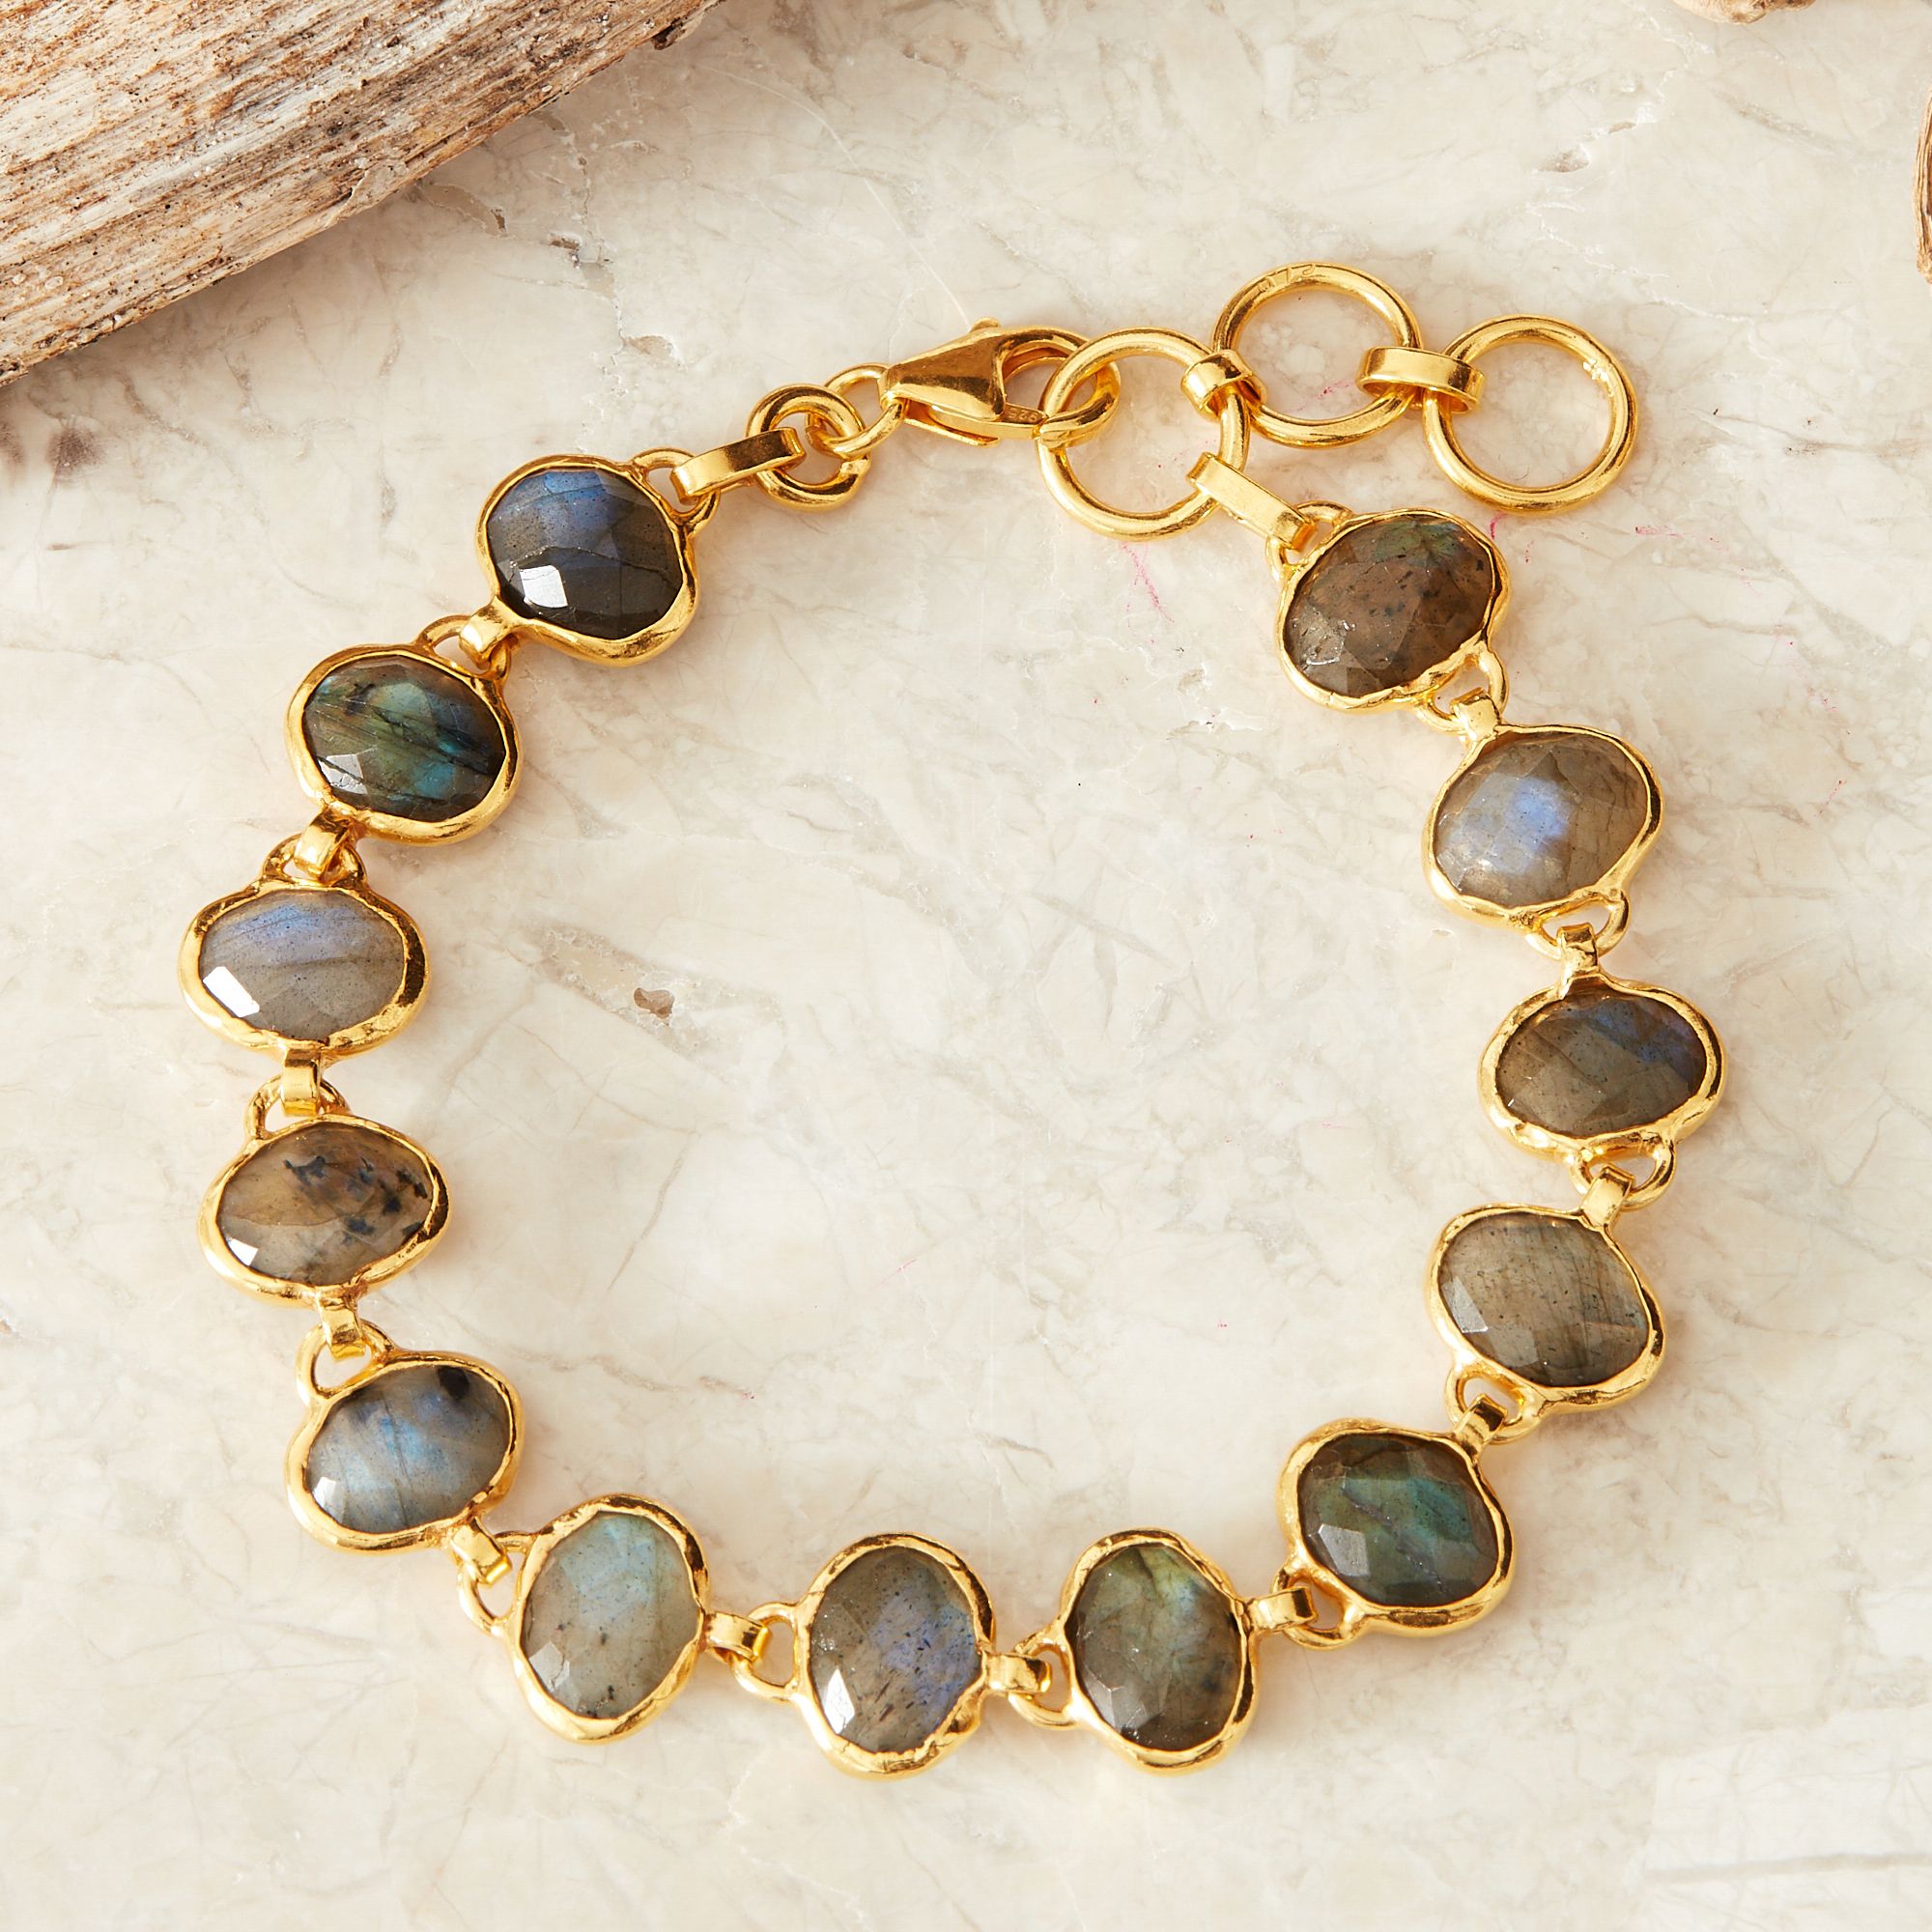 Gemstones and gold handmade jewellery.